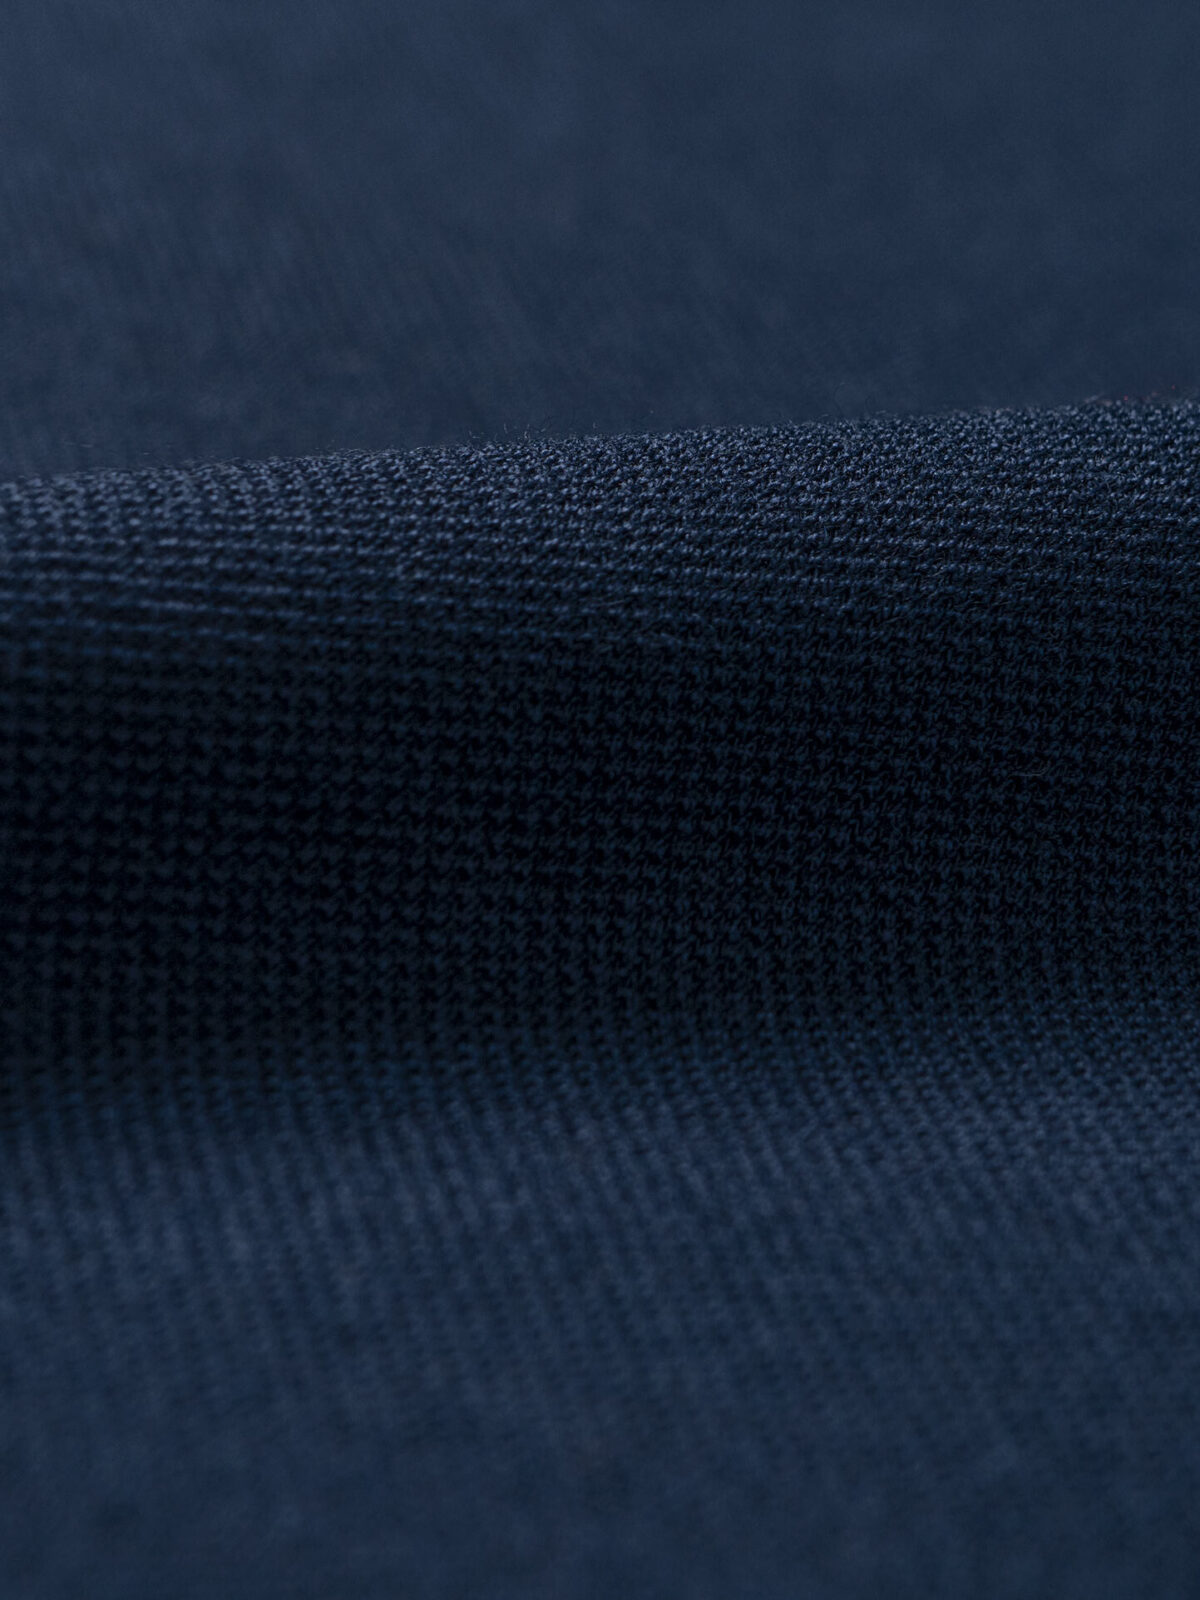 Carmel Navy Organic Cotton and Refibra Pique Shirts by Proper Cloth